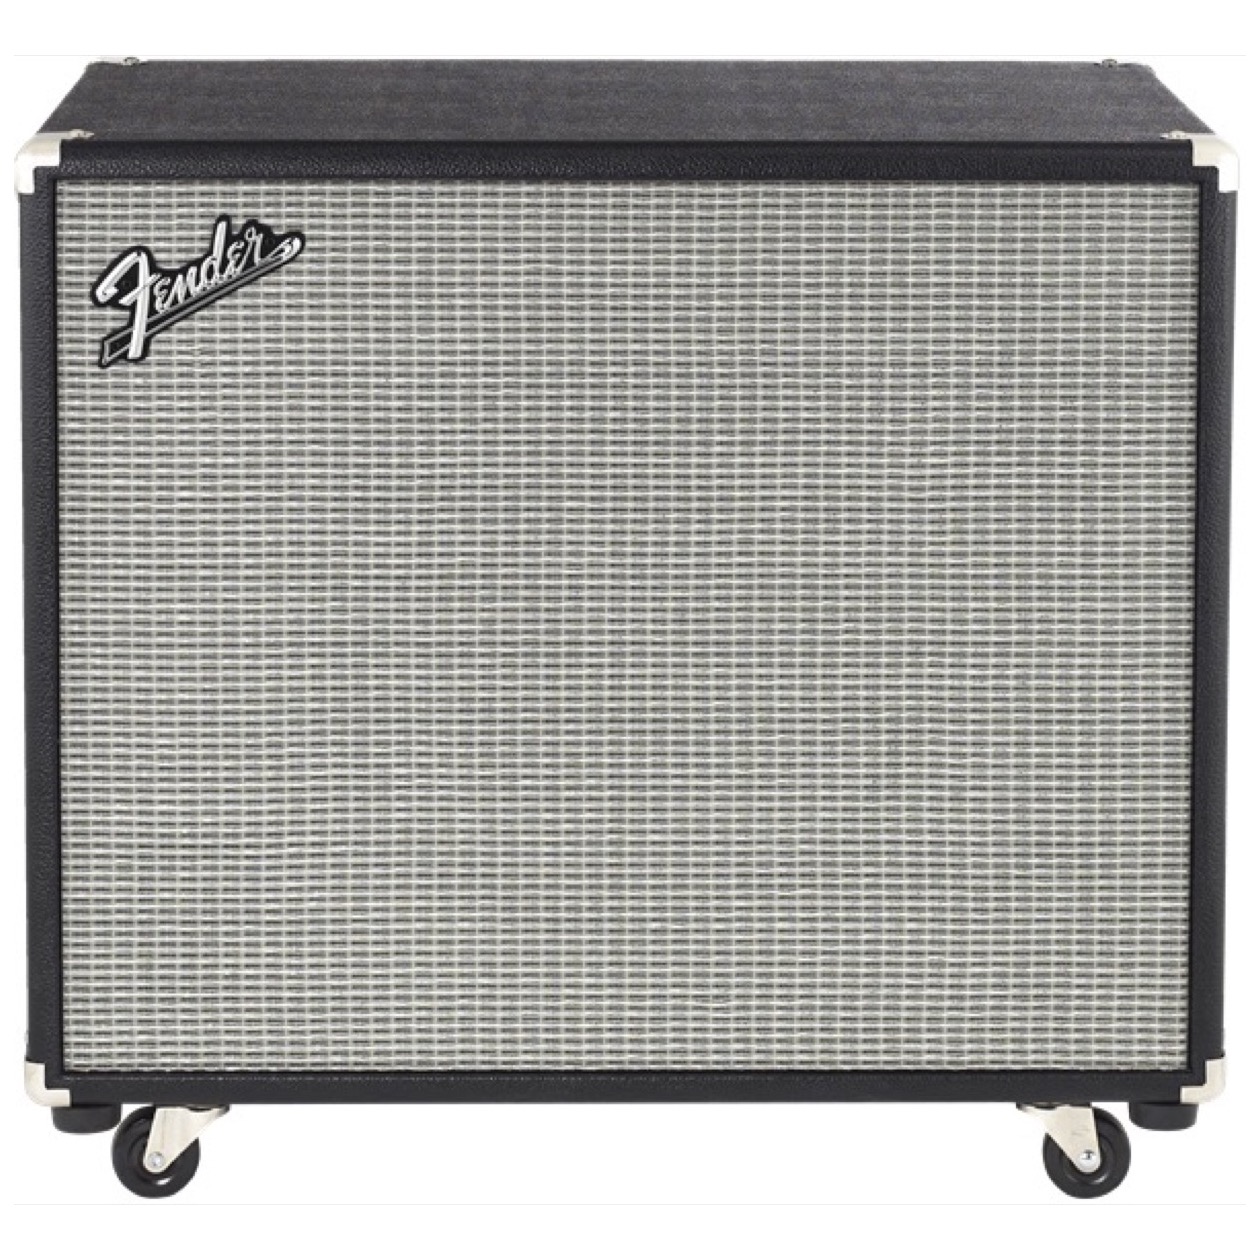 Fender Bassman 115 Neo, Black/Silver 350 watts 1 x 15” Fender Special Design Eminence® U.S.A Speaker Enclosure